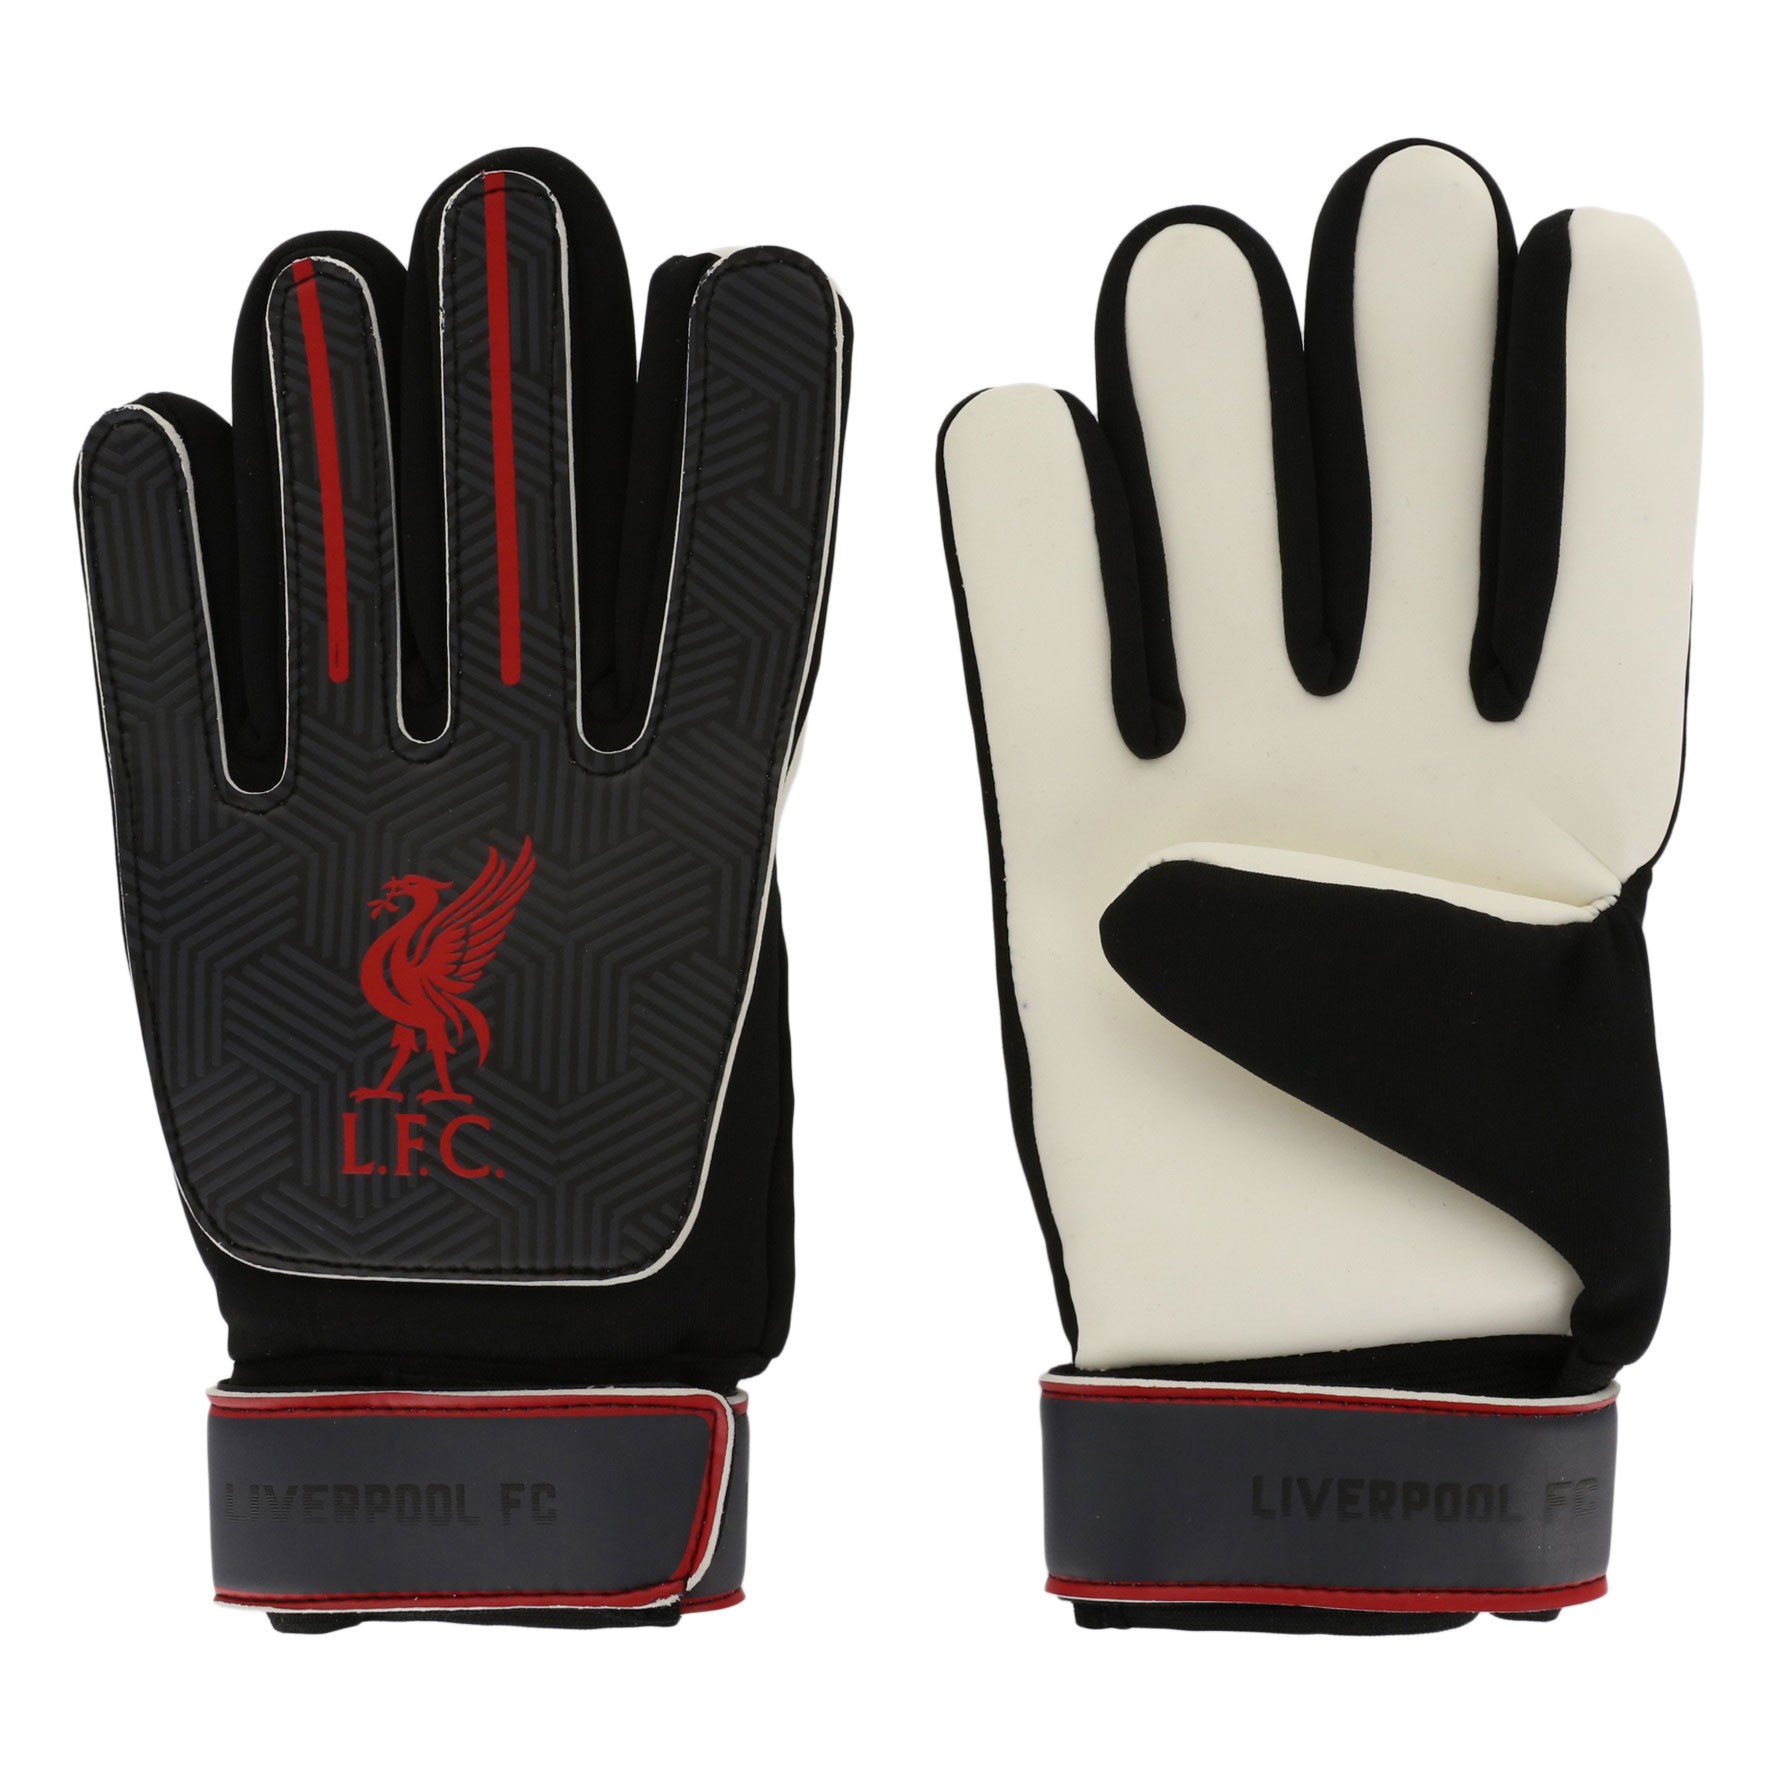 LFC Mens Goalkeeper Gloves